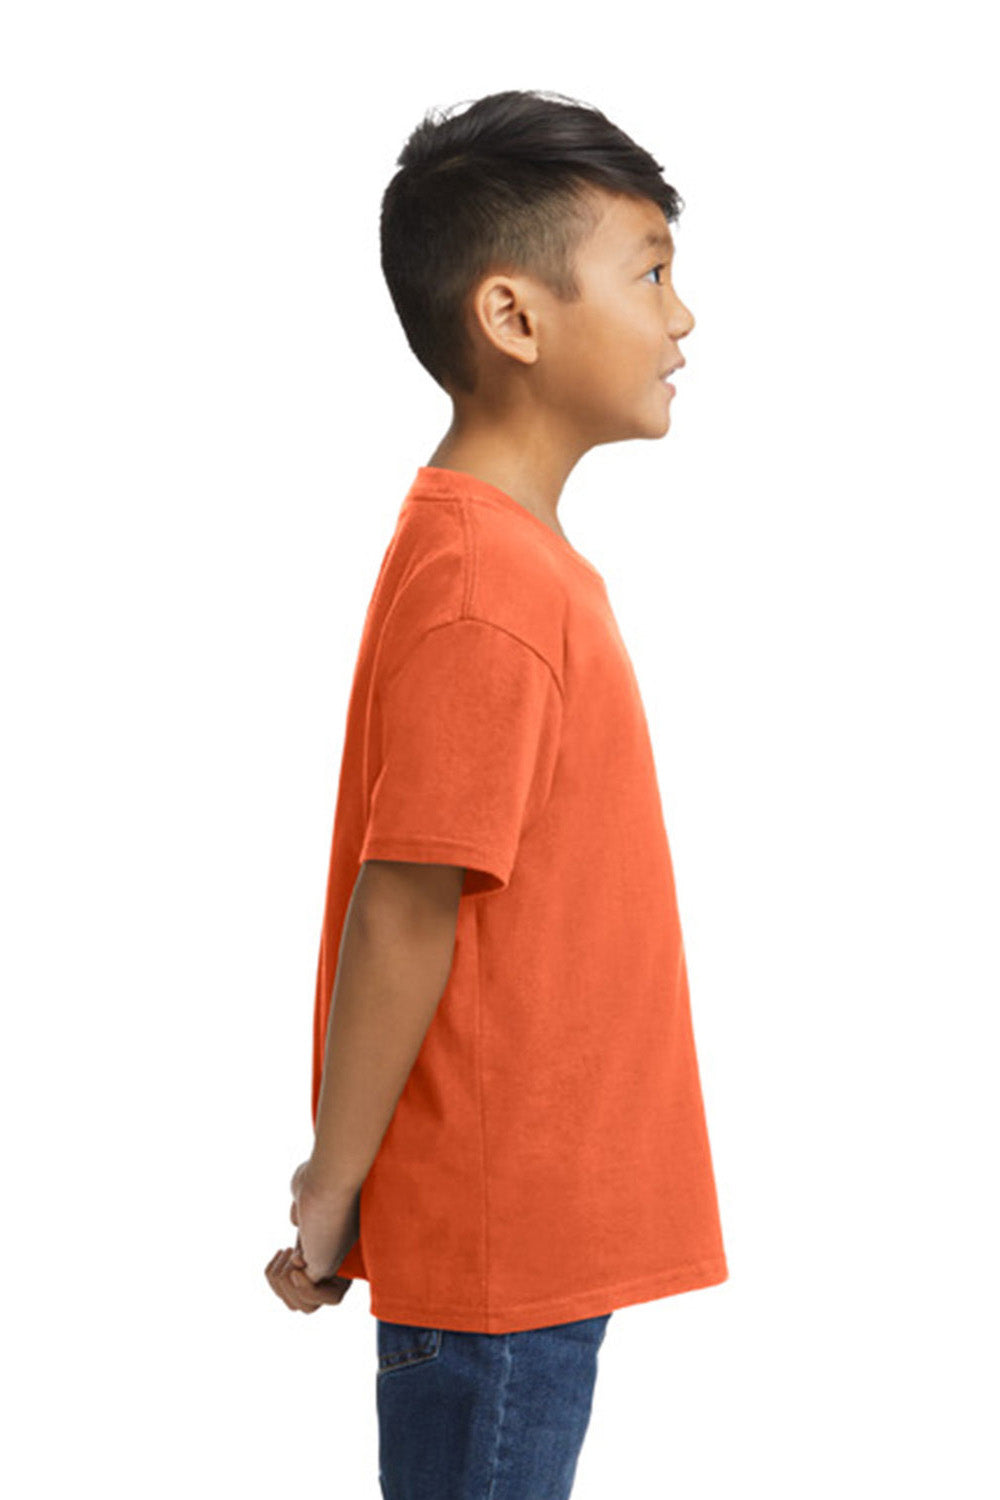 Gildan G650B Youth Softstyle Short Sleeve Crewneck T-Shirt Orange Side